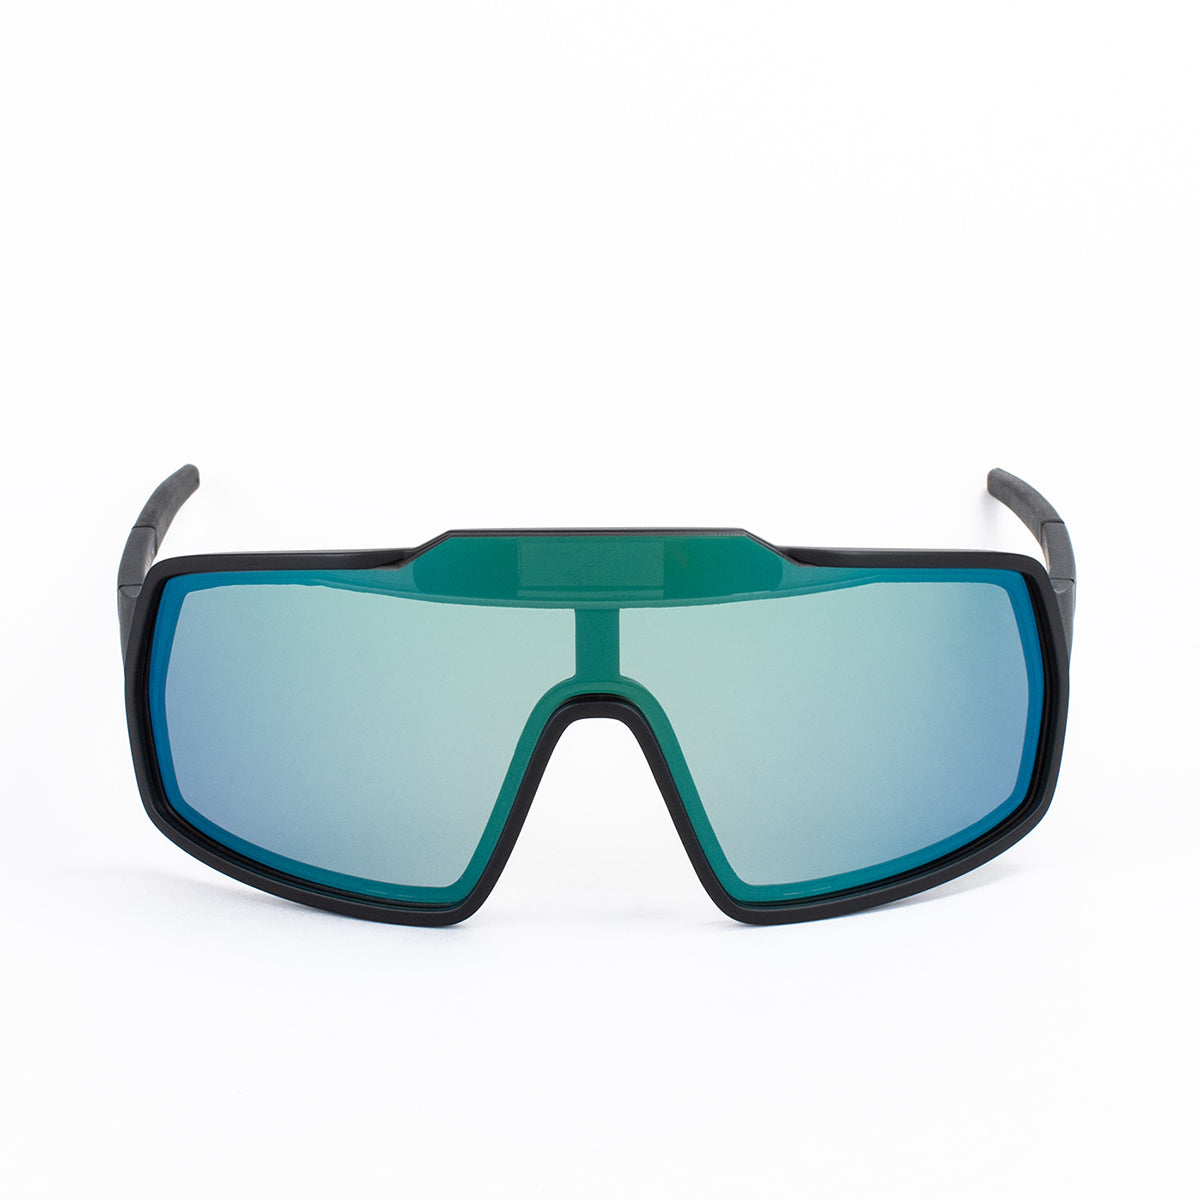 OutOf Elecronic Sunglasses Bot 2 Irid Green